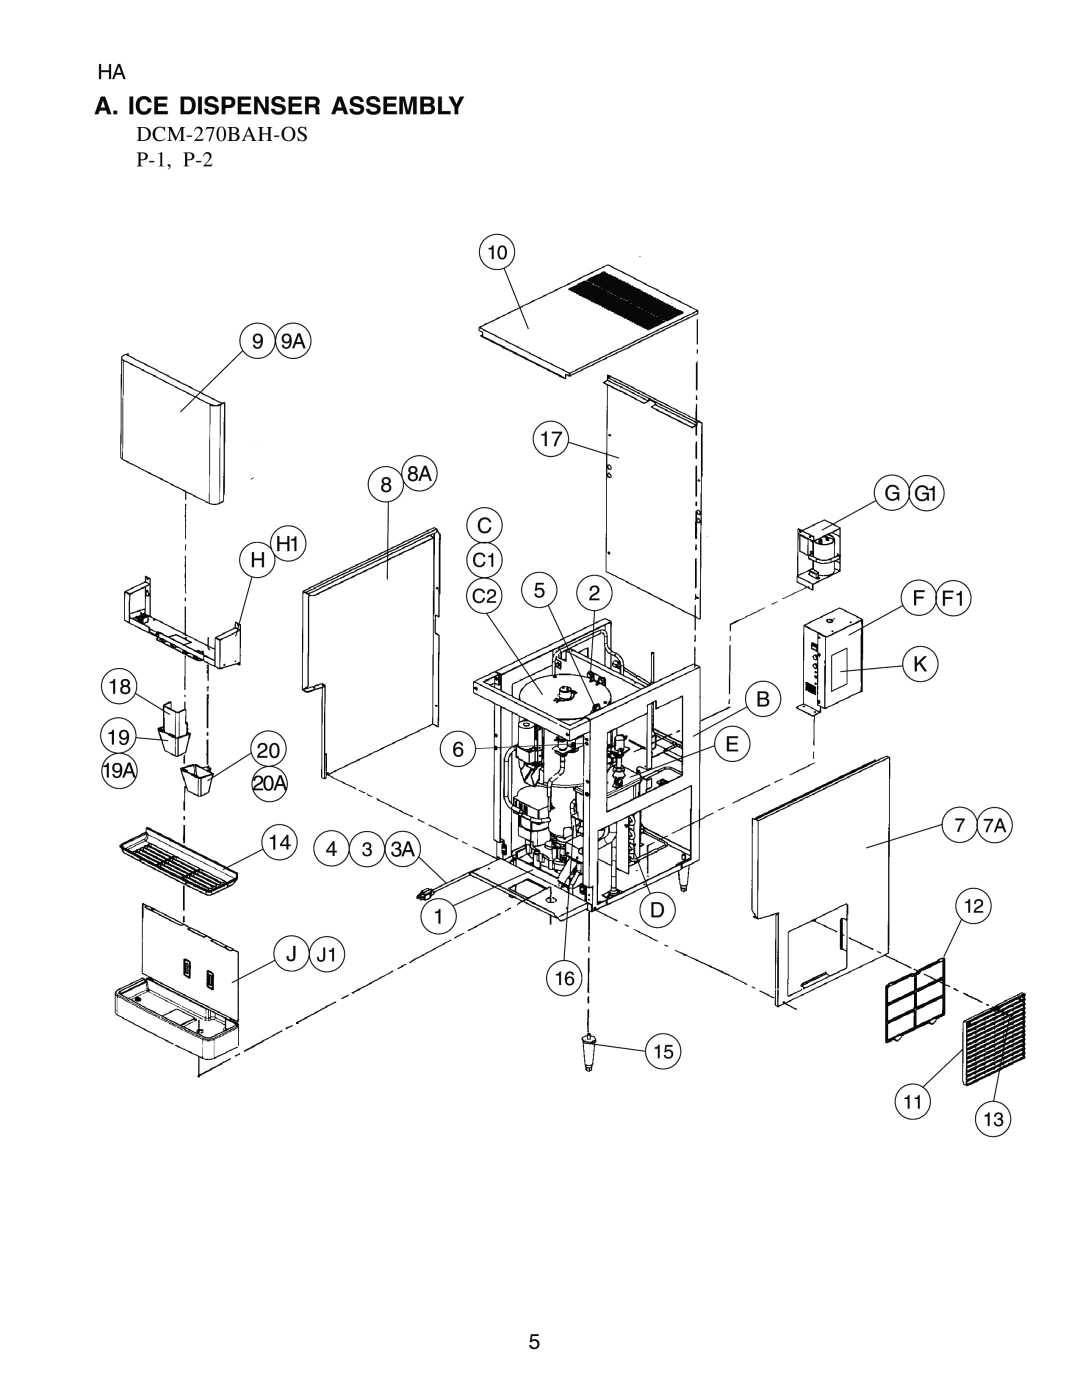 Hoshizaki manual A. Ice Dispenser Assembly, DCM-270BAH-OS P-1, P-2, 9 9A, G G1, F F1, 14 4 3 3A, J J1, 7 7A 